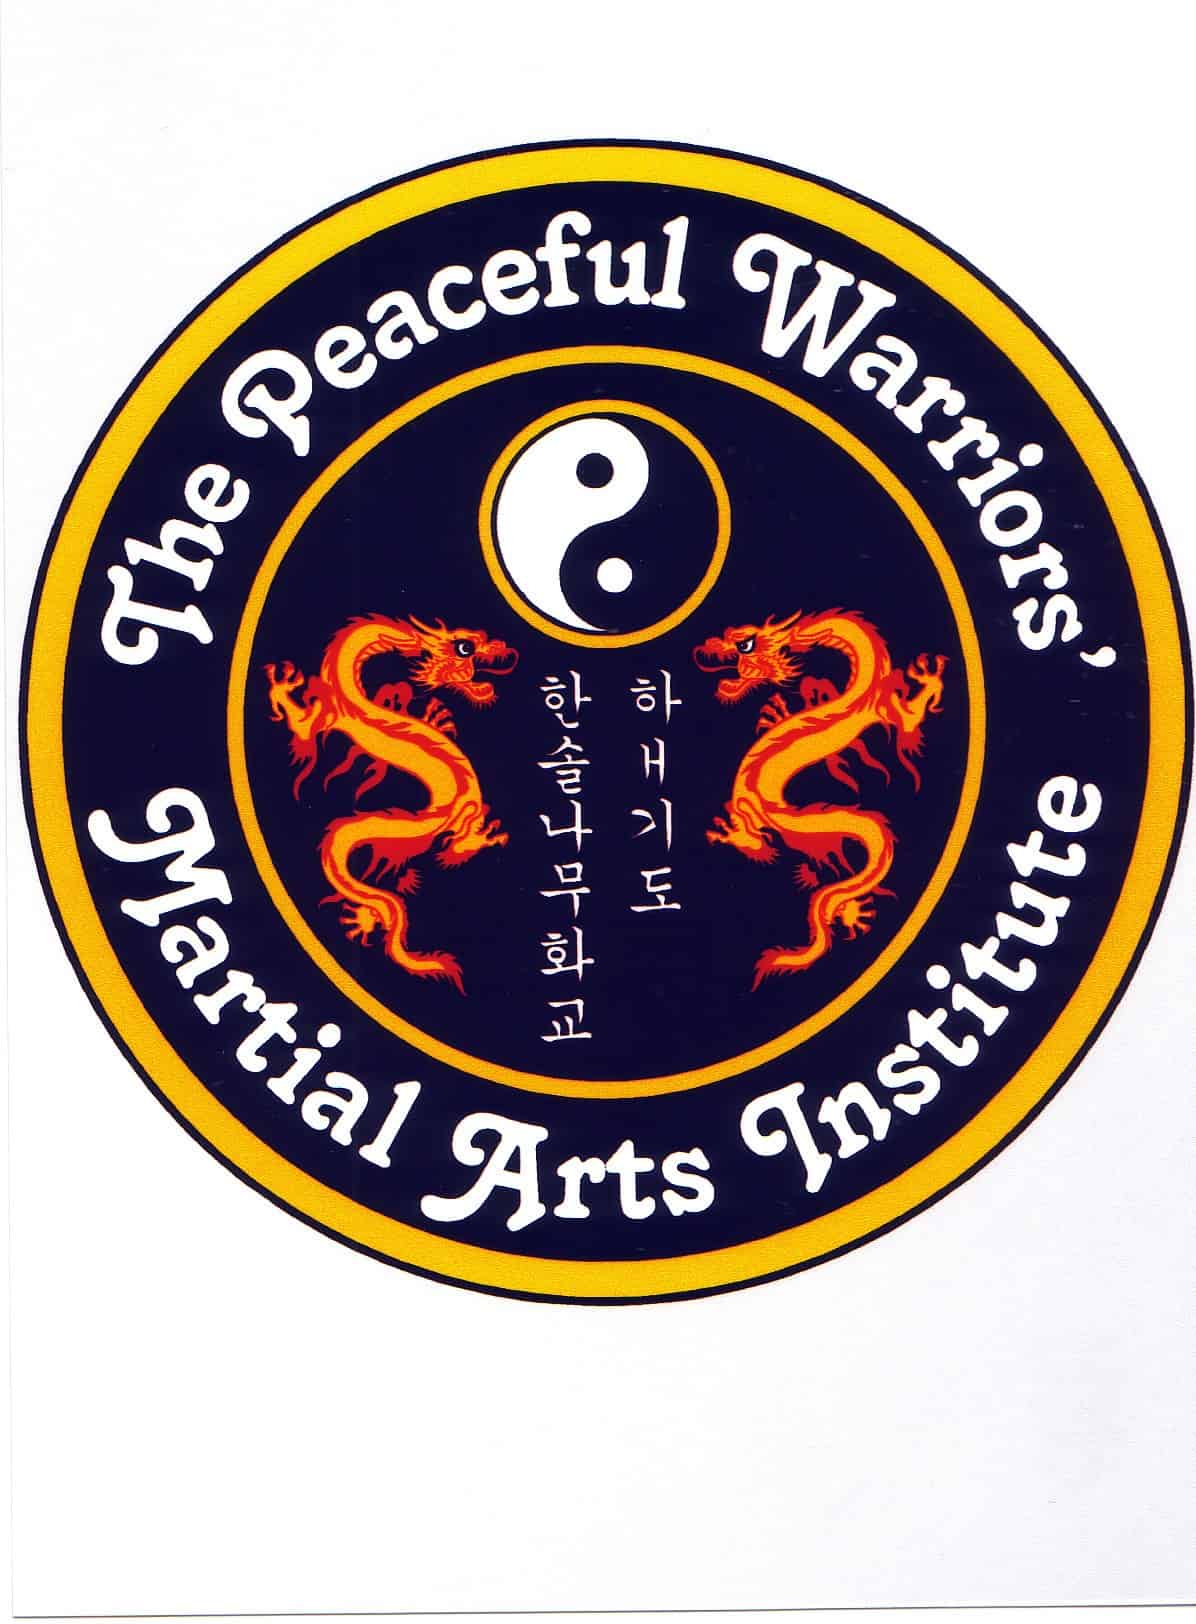 Art Mason's Peaceful Warriors Martial Arts Institute